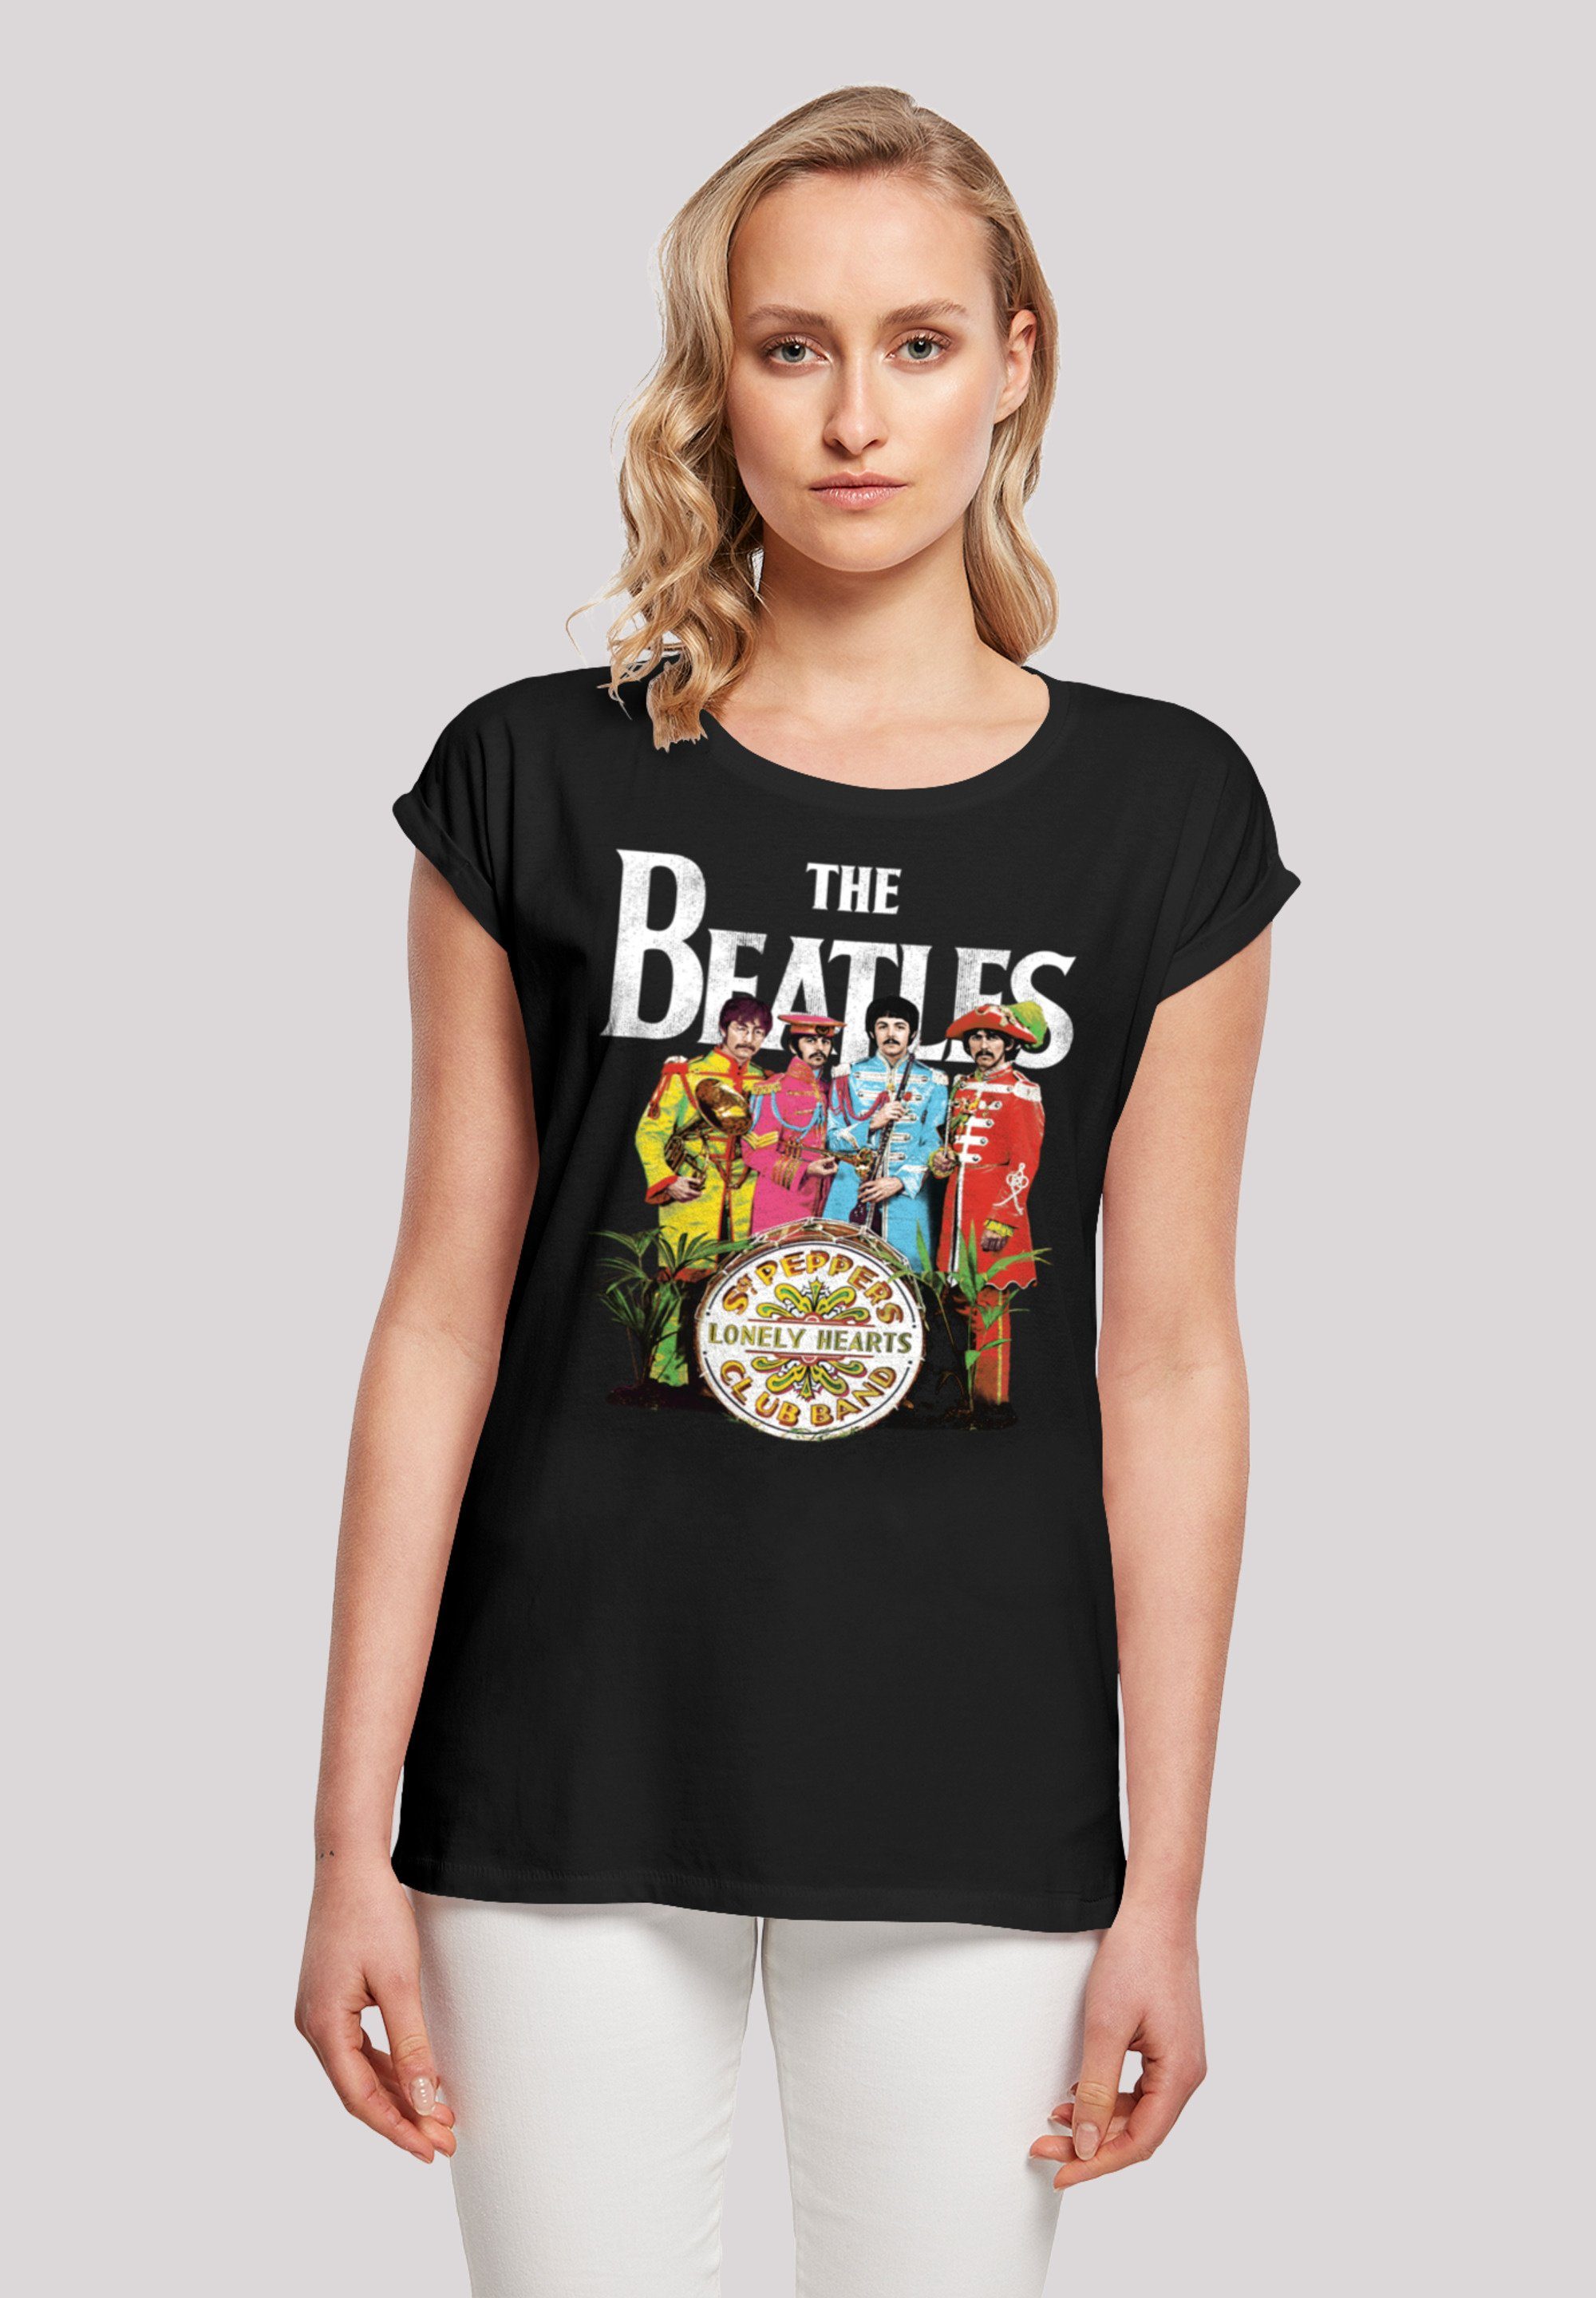 Extrem beliebter Klassiker F4NT4STIC T-Shirt The Beatles Band weicher Tragekomfort Sehr Print, mit Black Sgt hohem Pepper Baumwollstoff